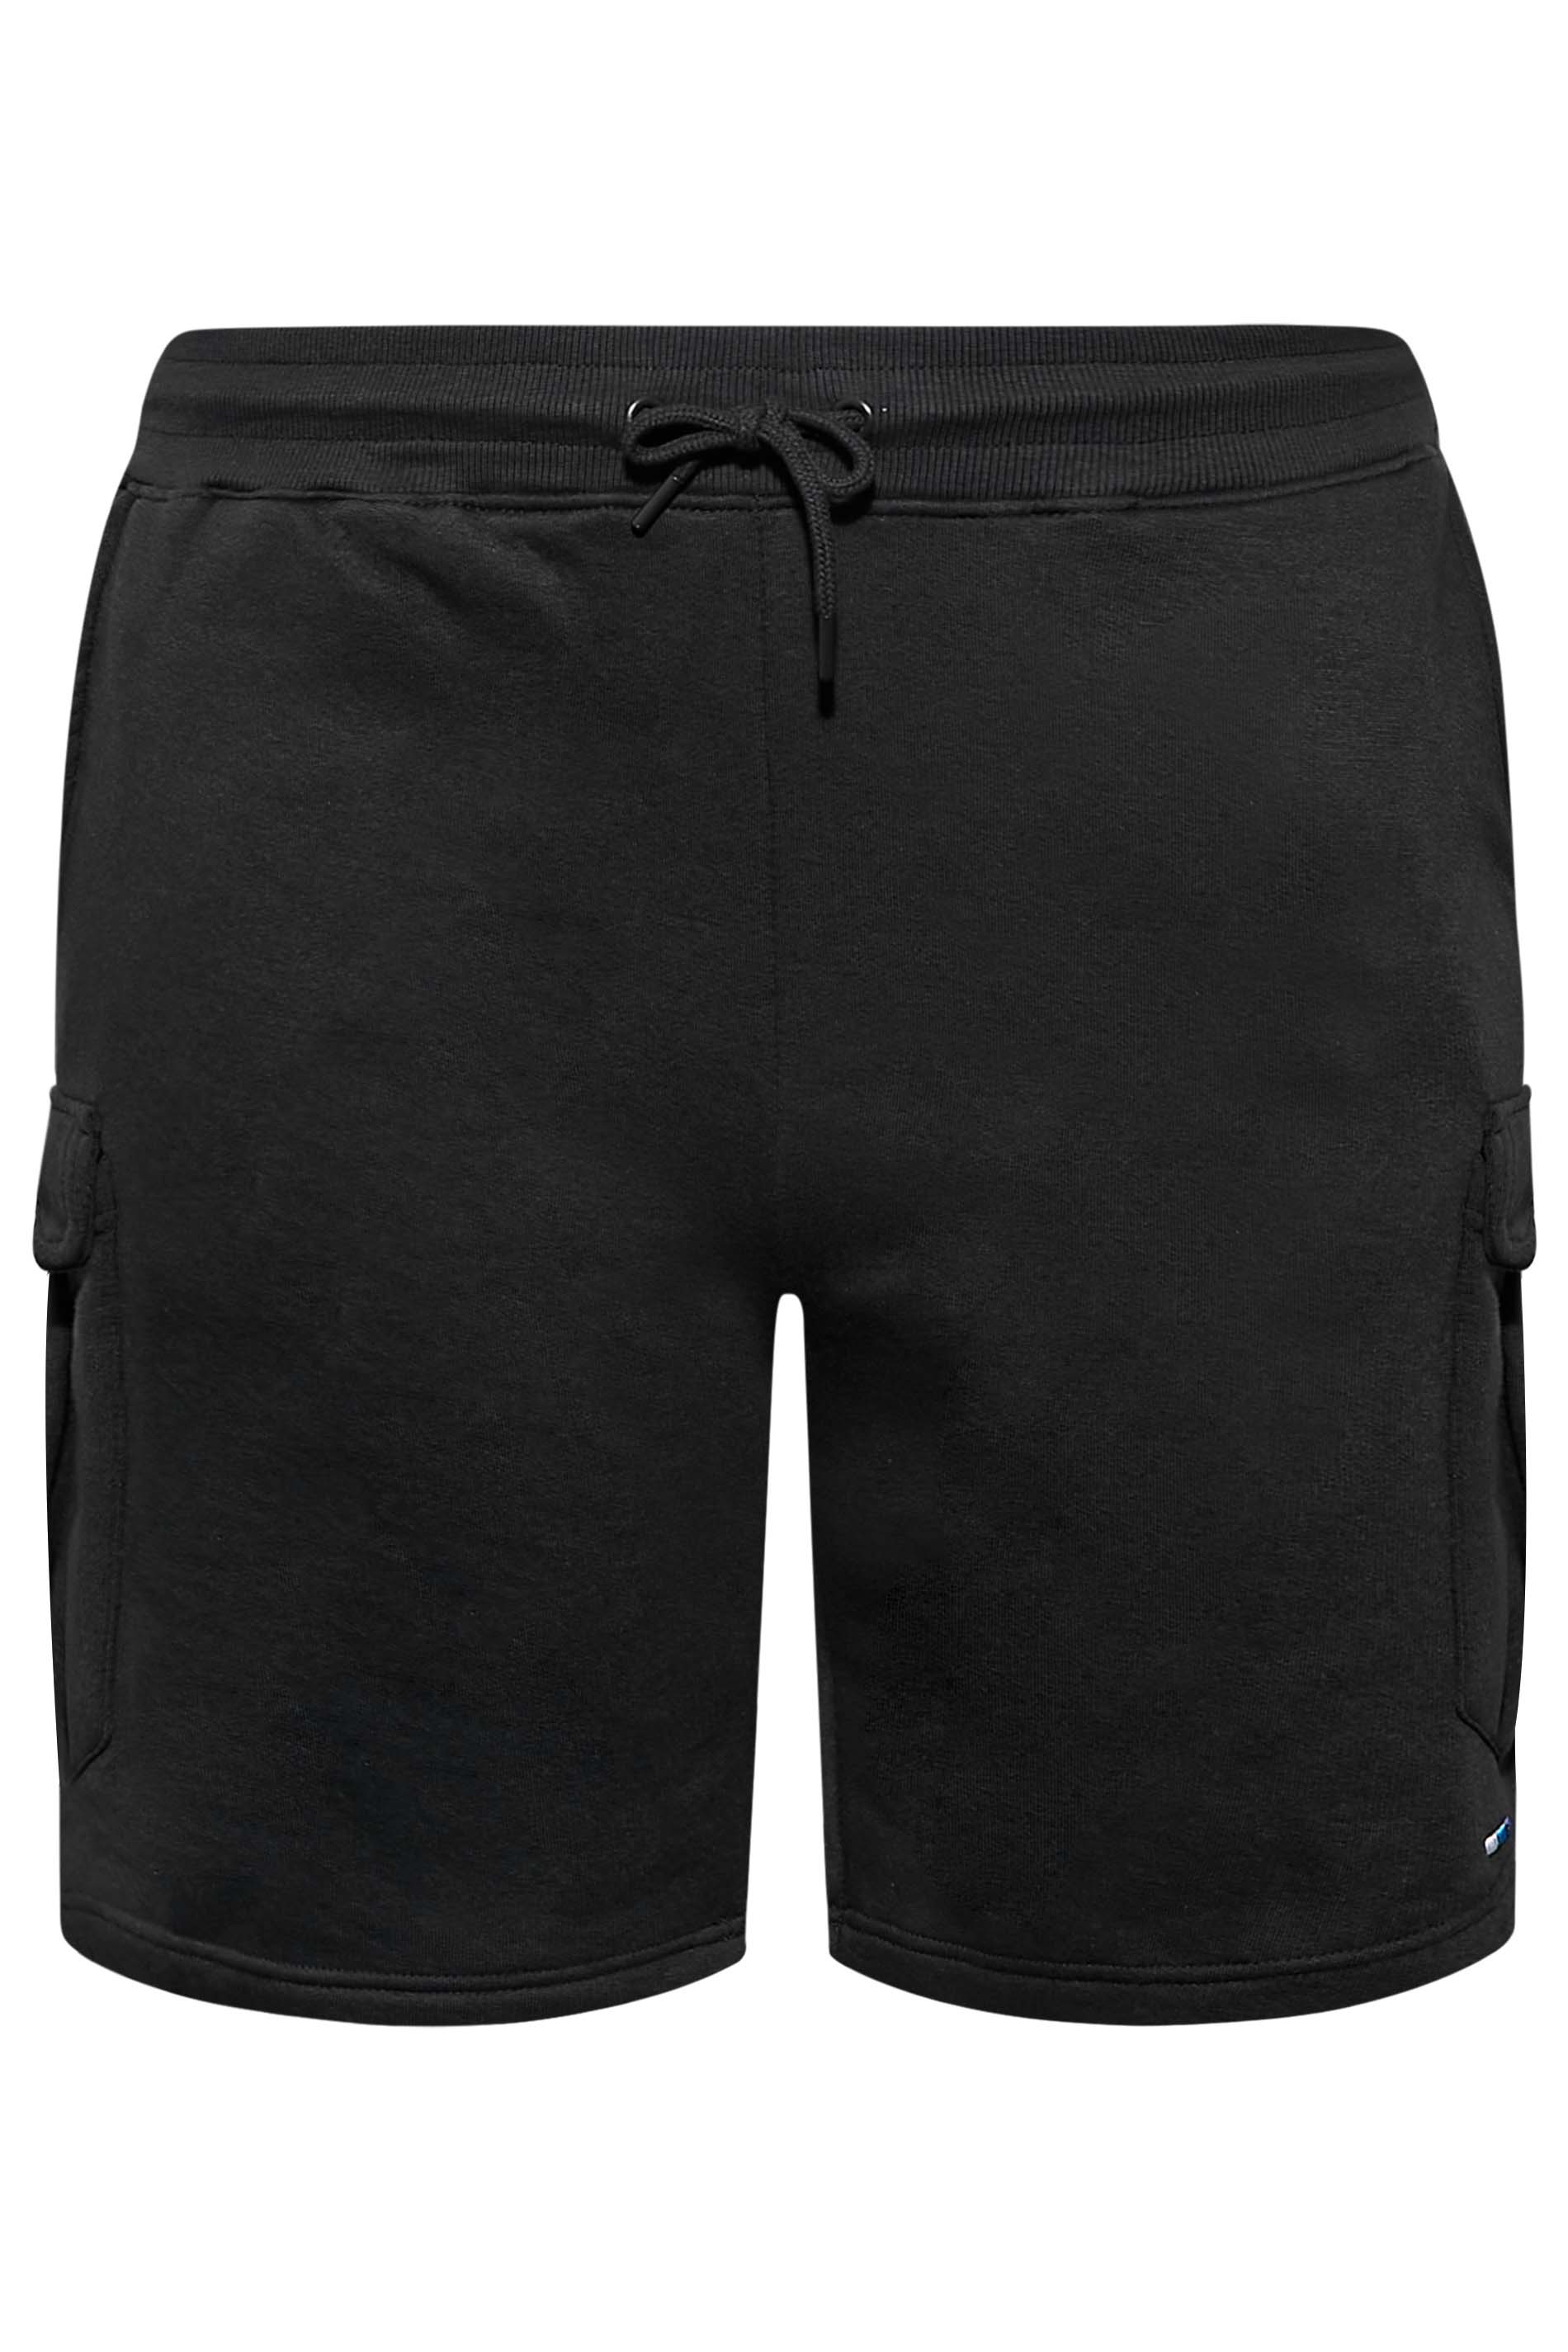 BadRhino Black Essential Cargo Jogger Shorts | BadRhino